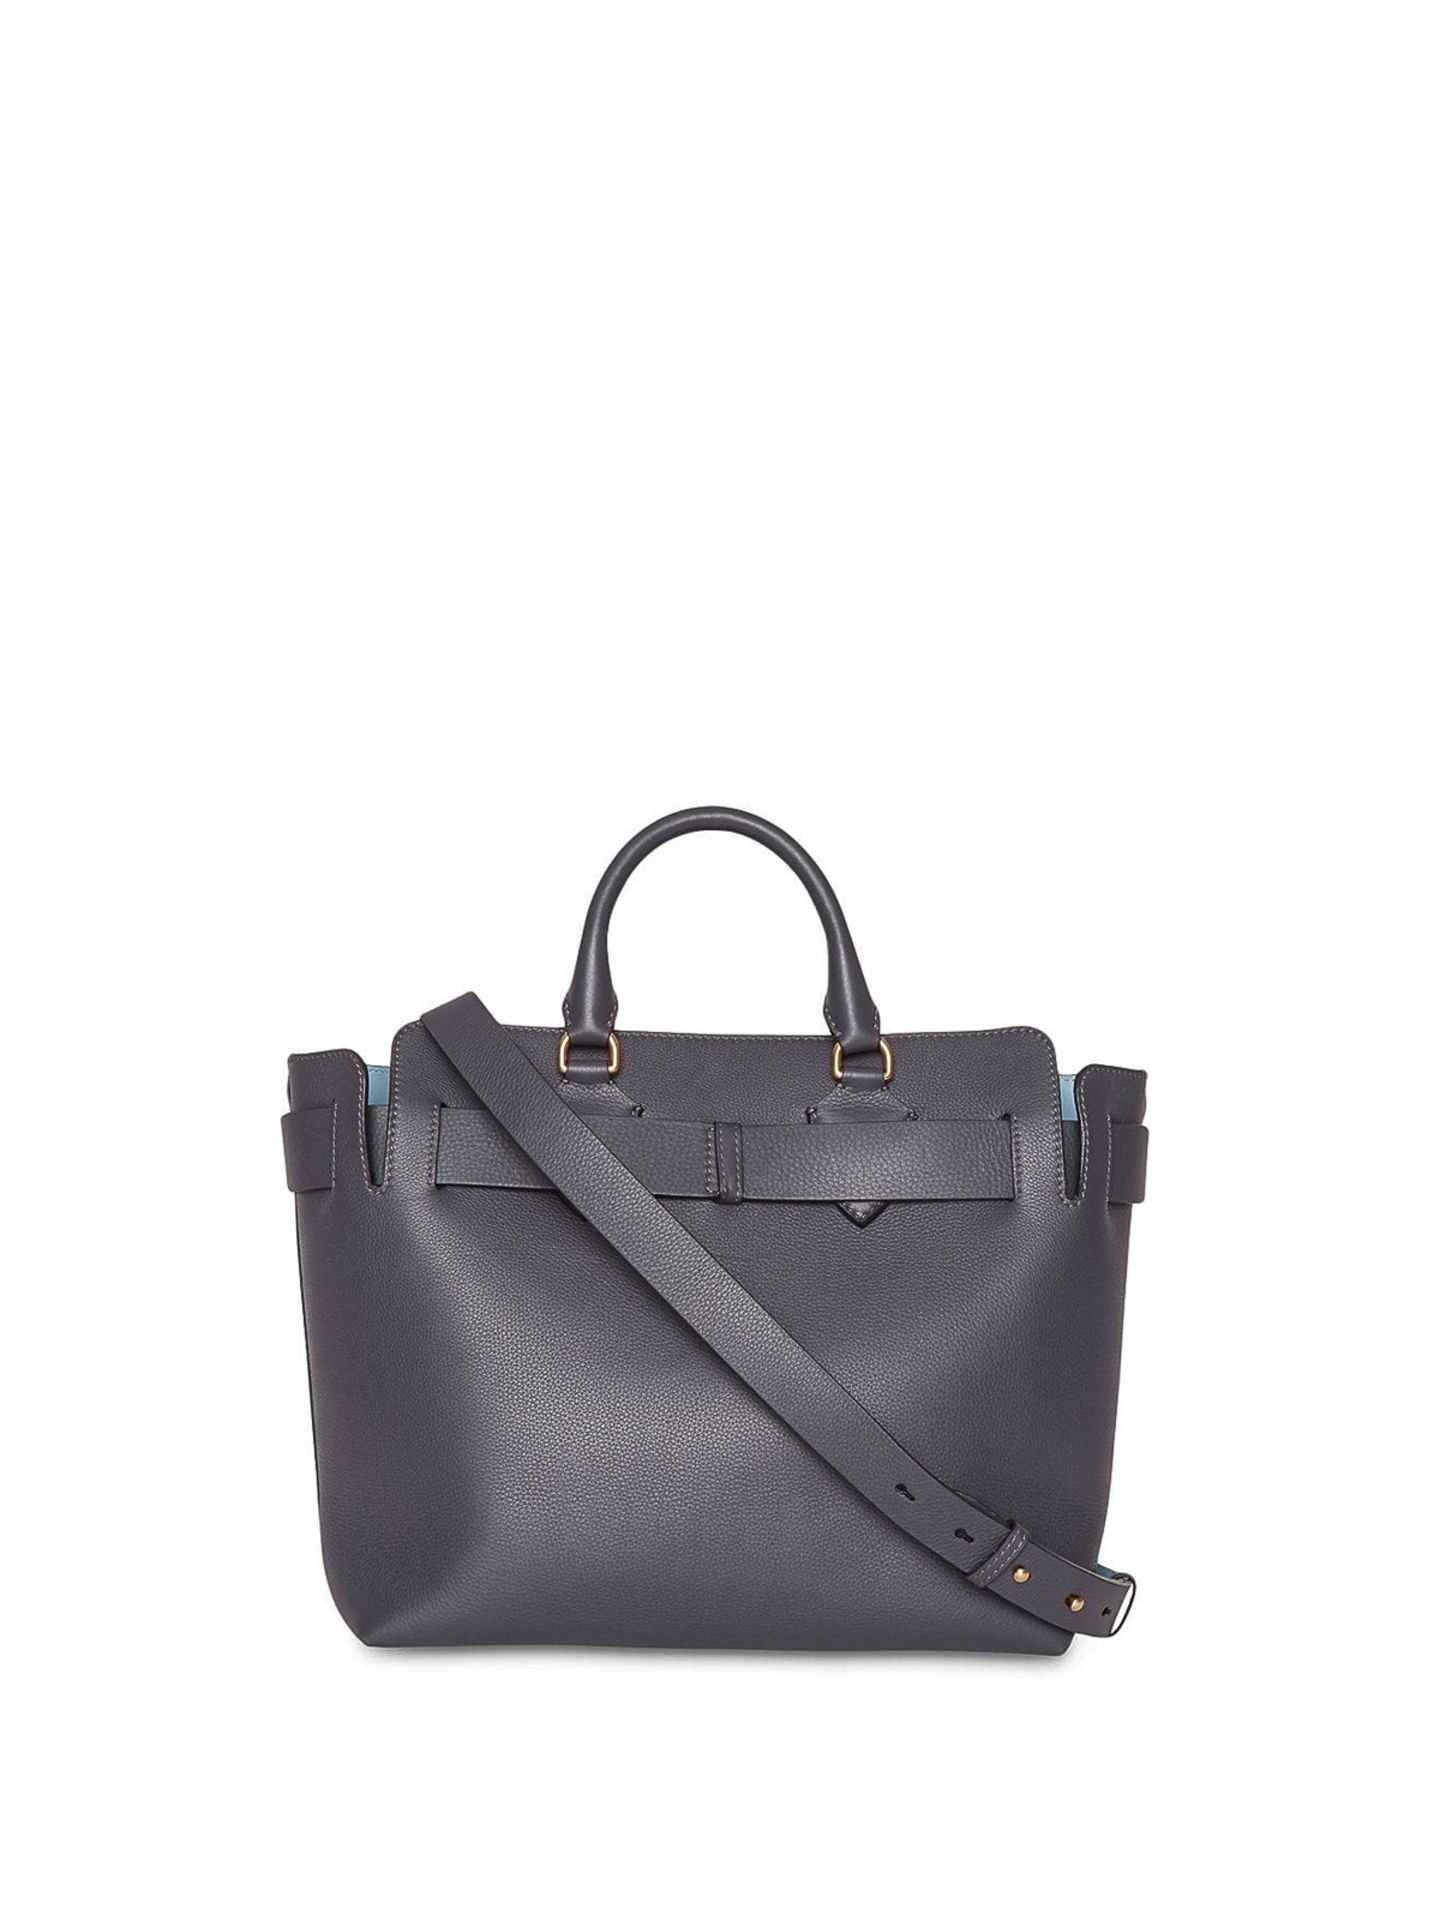 Genuine Burberry The Medium leather Belt Bag. Charcoal grey and baby blue. - Bild 2 aus 13